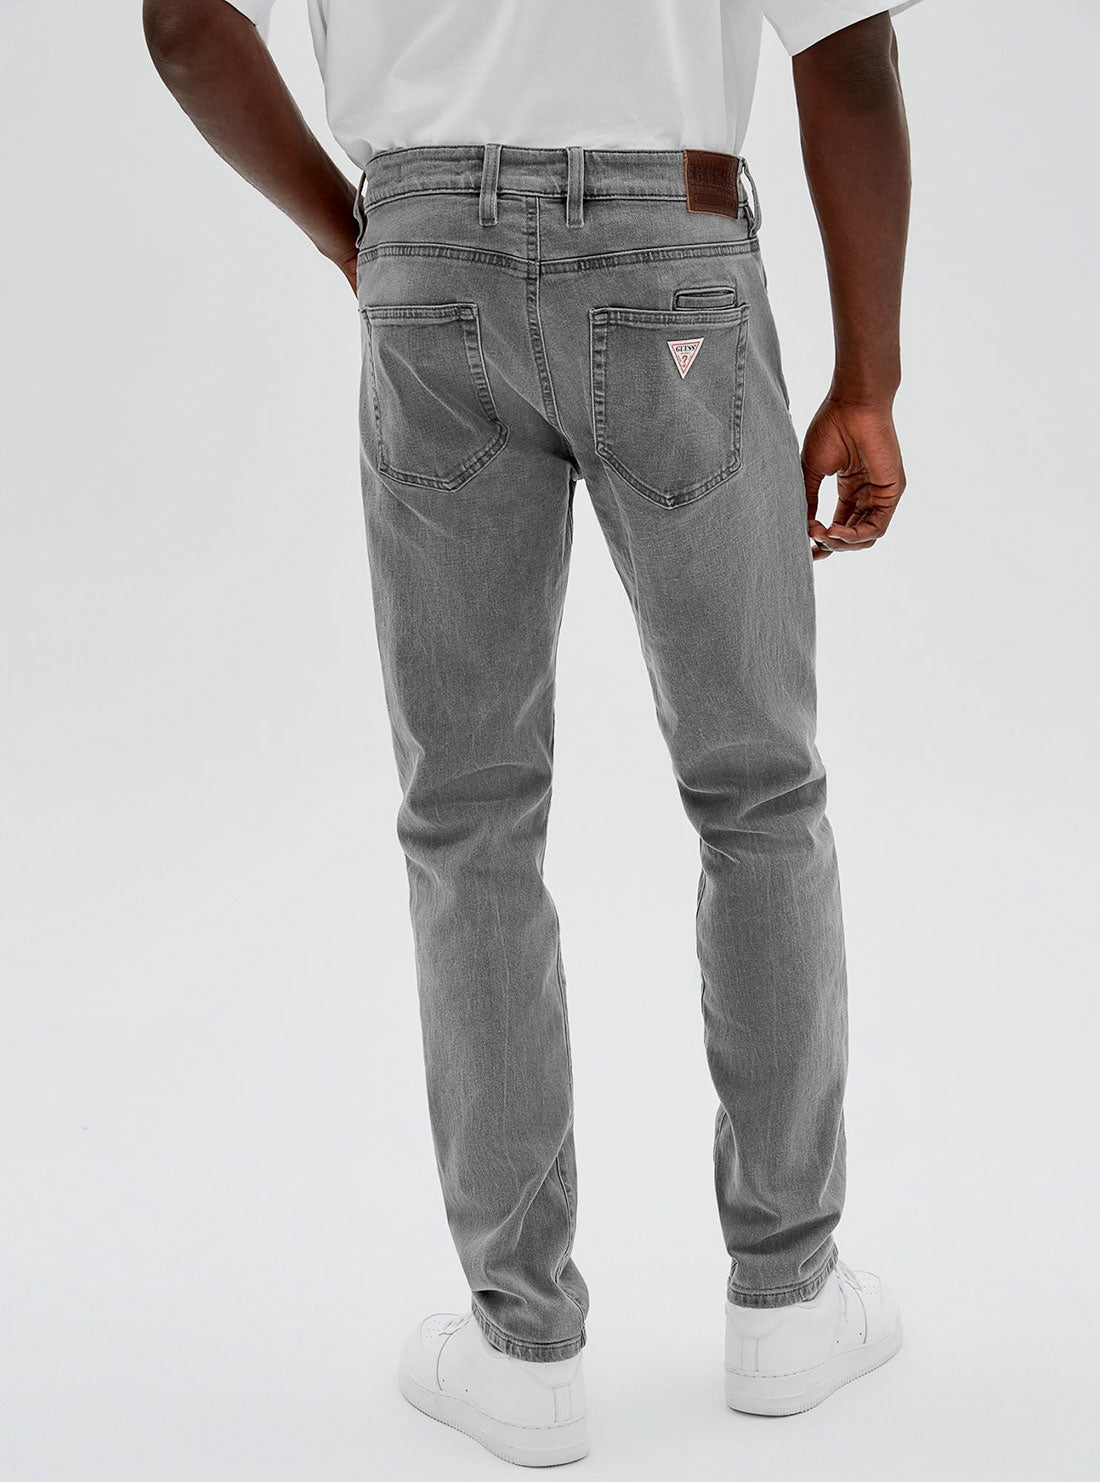 GUESS Mens Guess Originals Slim Straight Leg Jeans in Grey Pearl Wash M2GG33D4DA5 Back  View